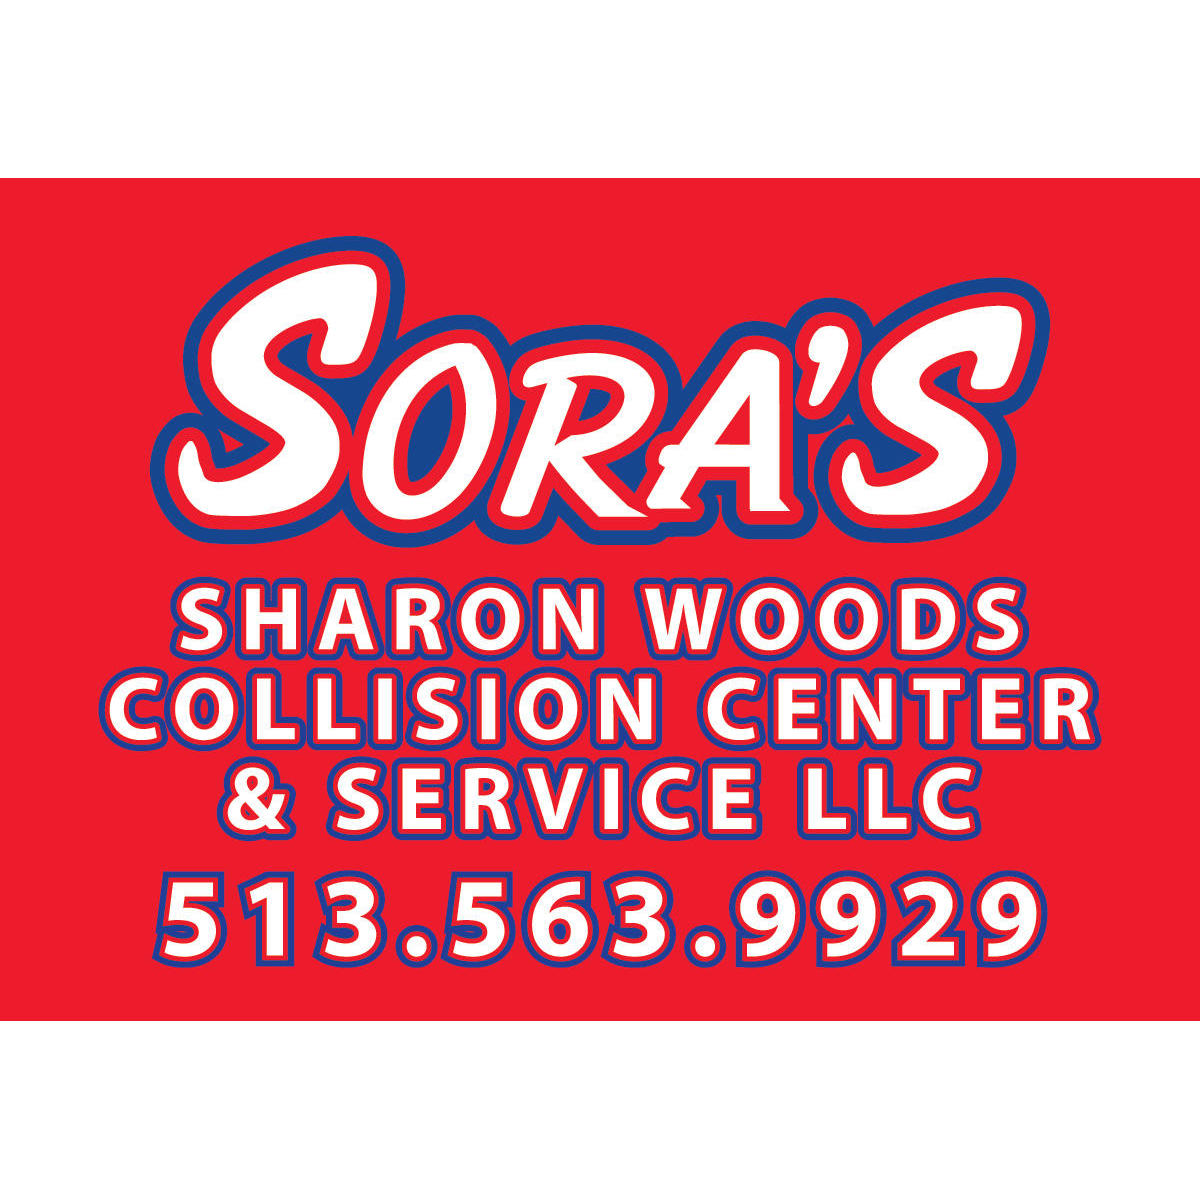 Sora's Sharon Woods Collision Center & Service, LLC